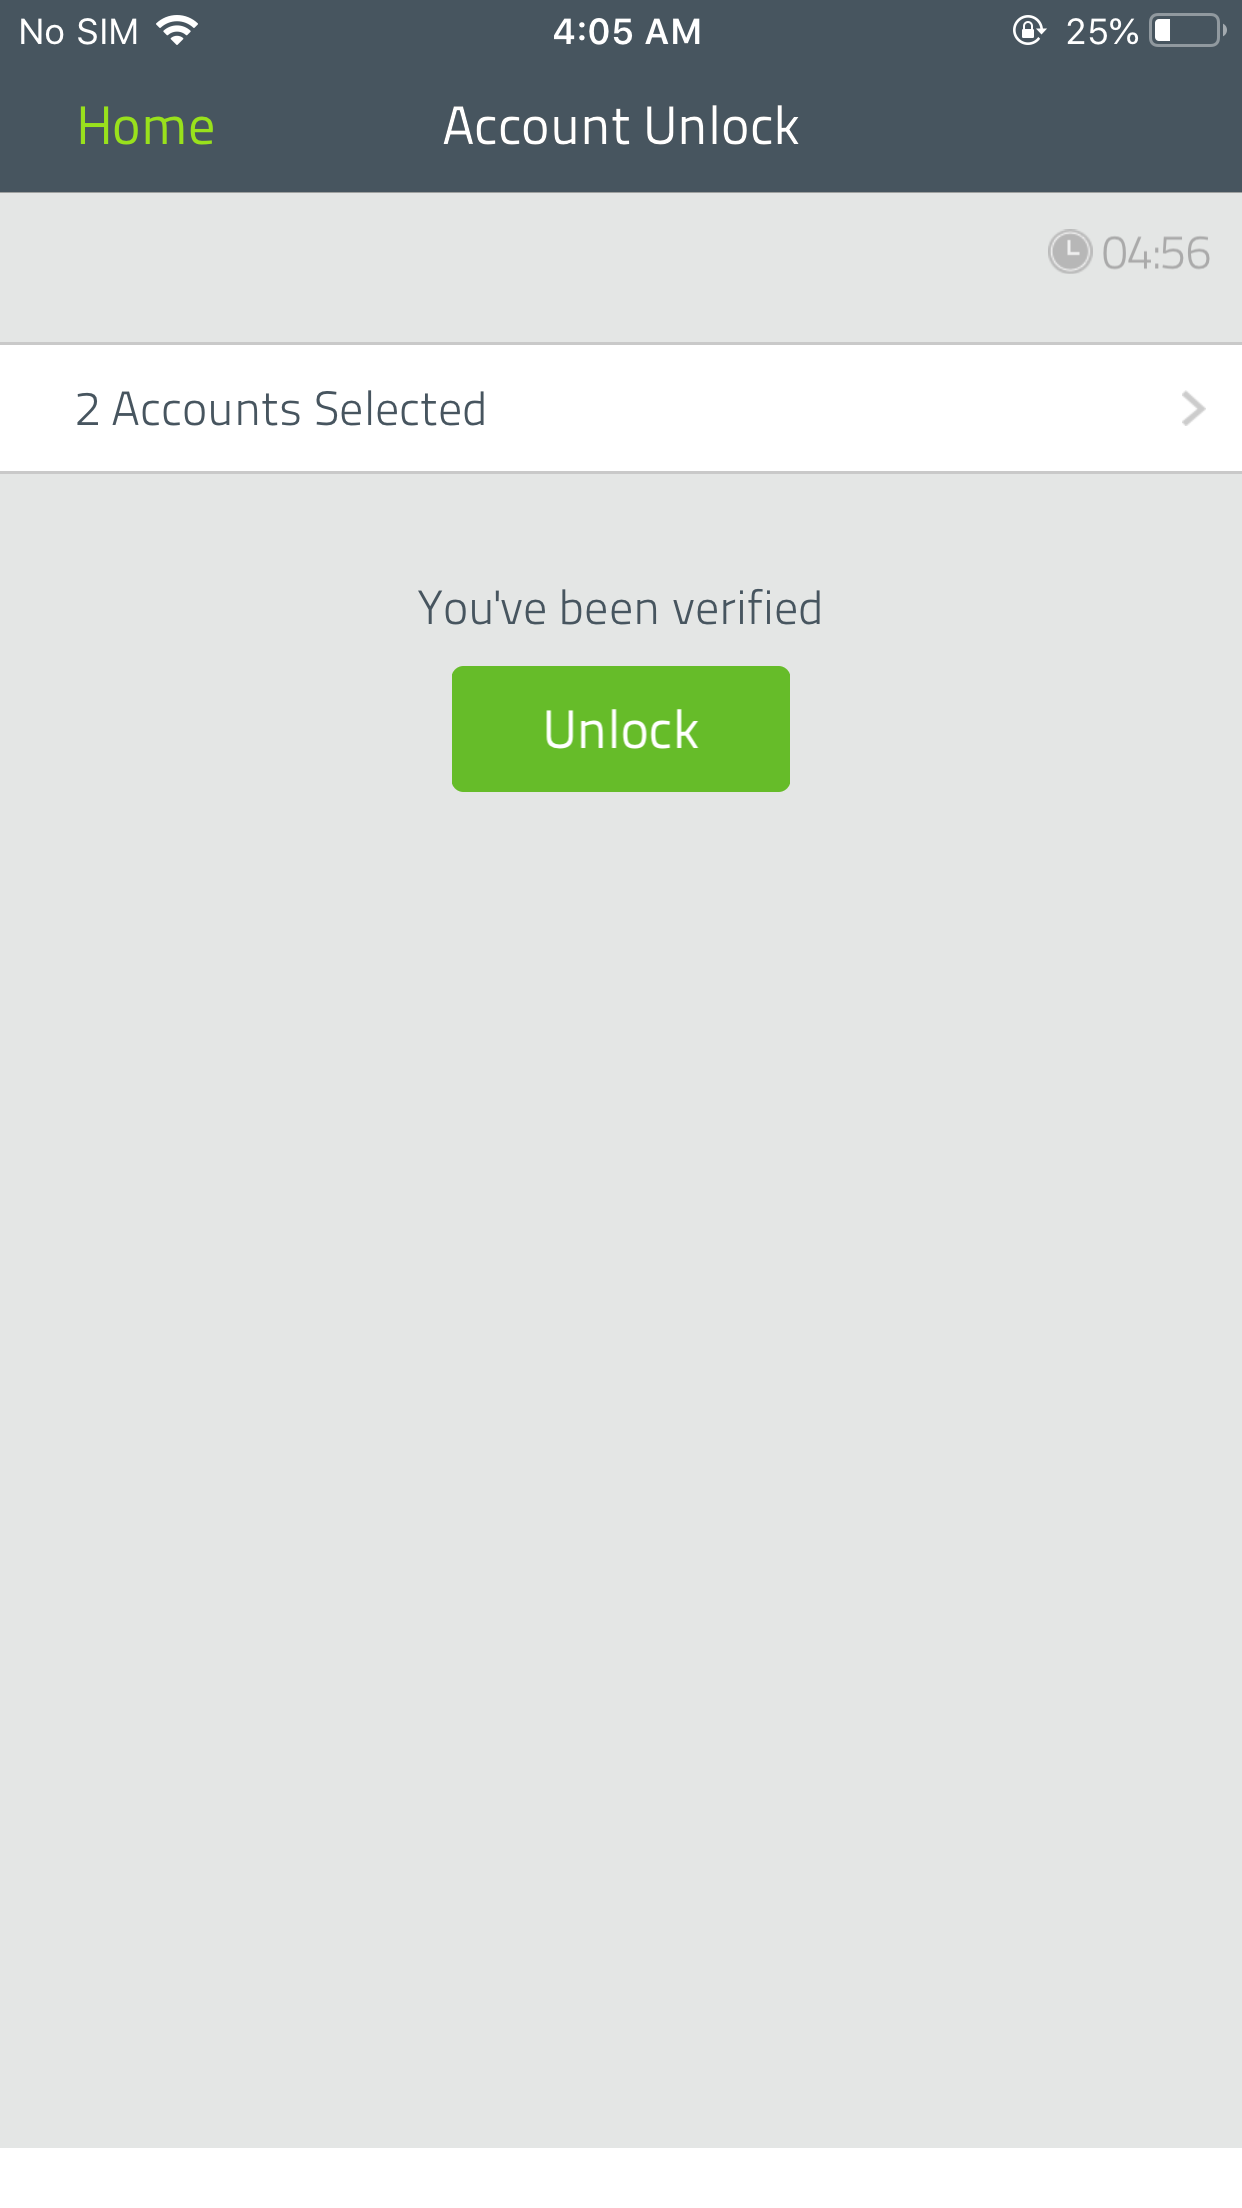 Account unlock via mobile app